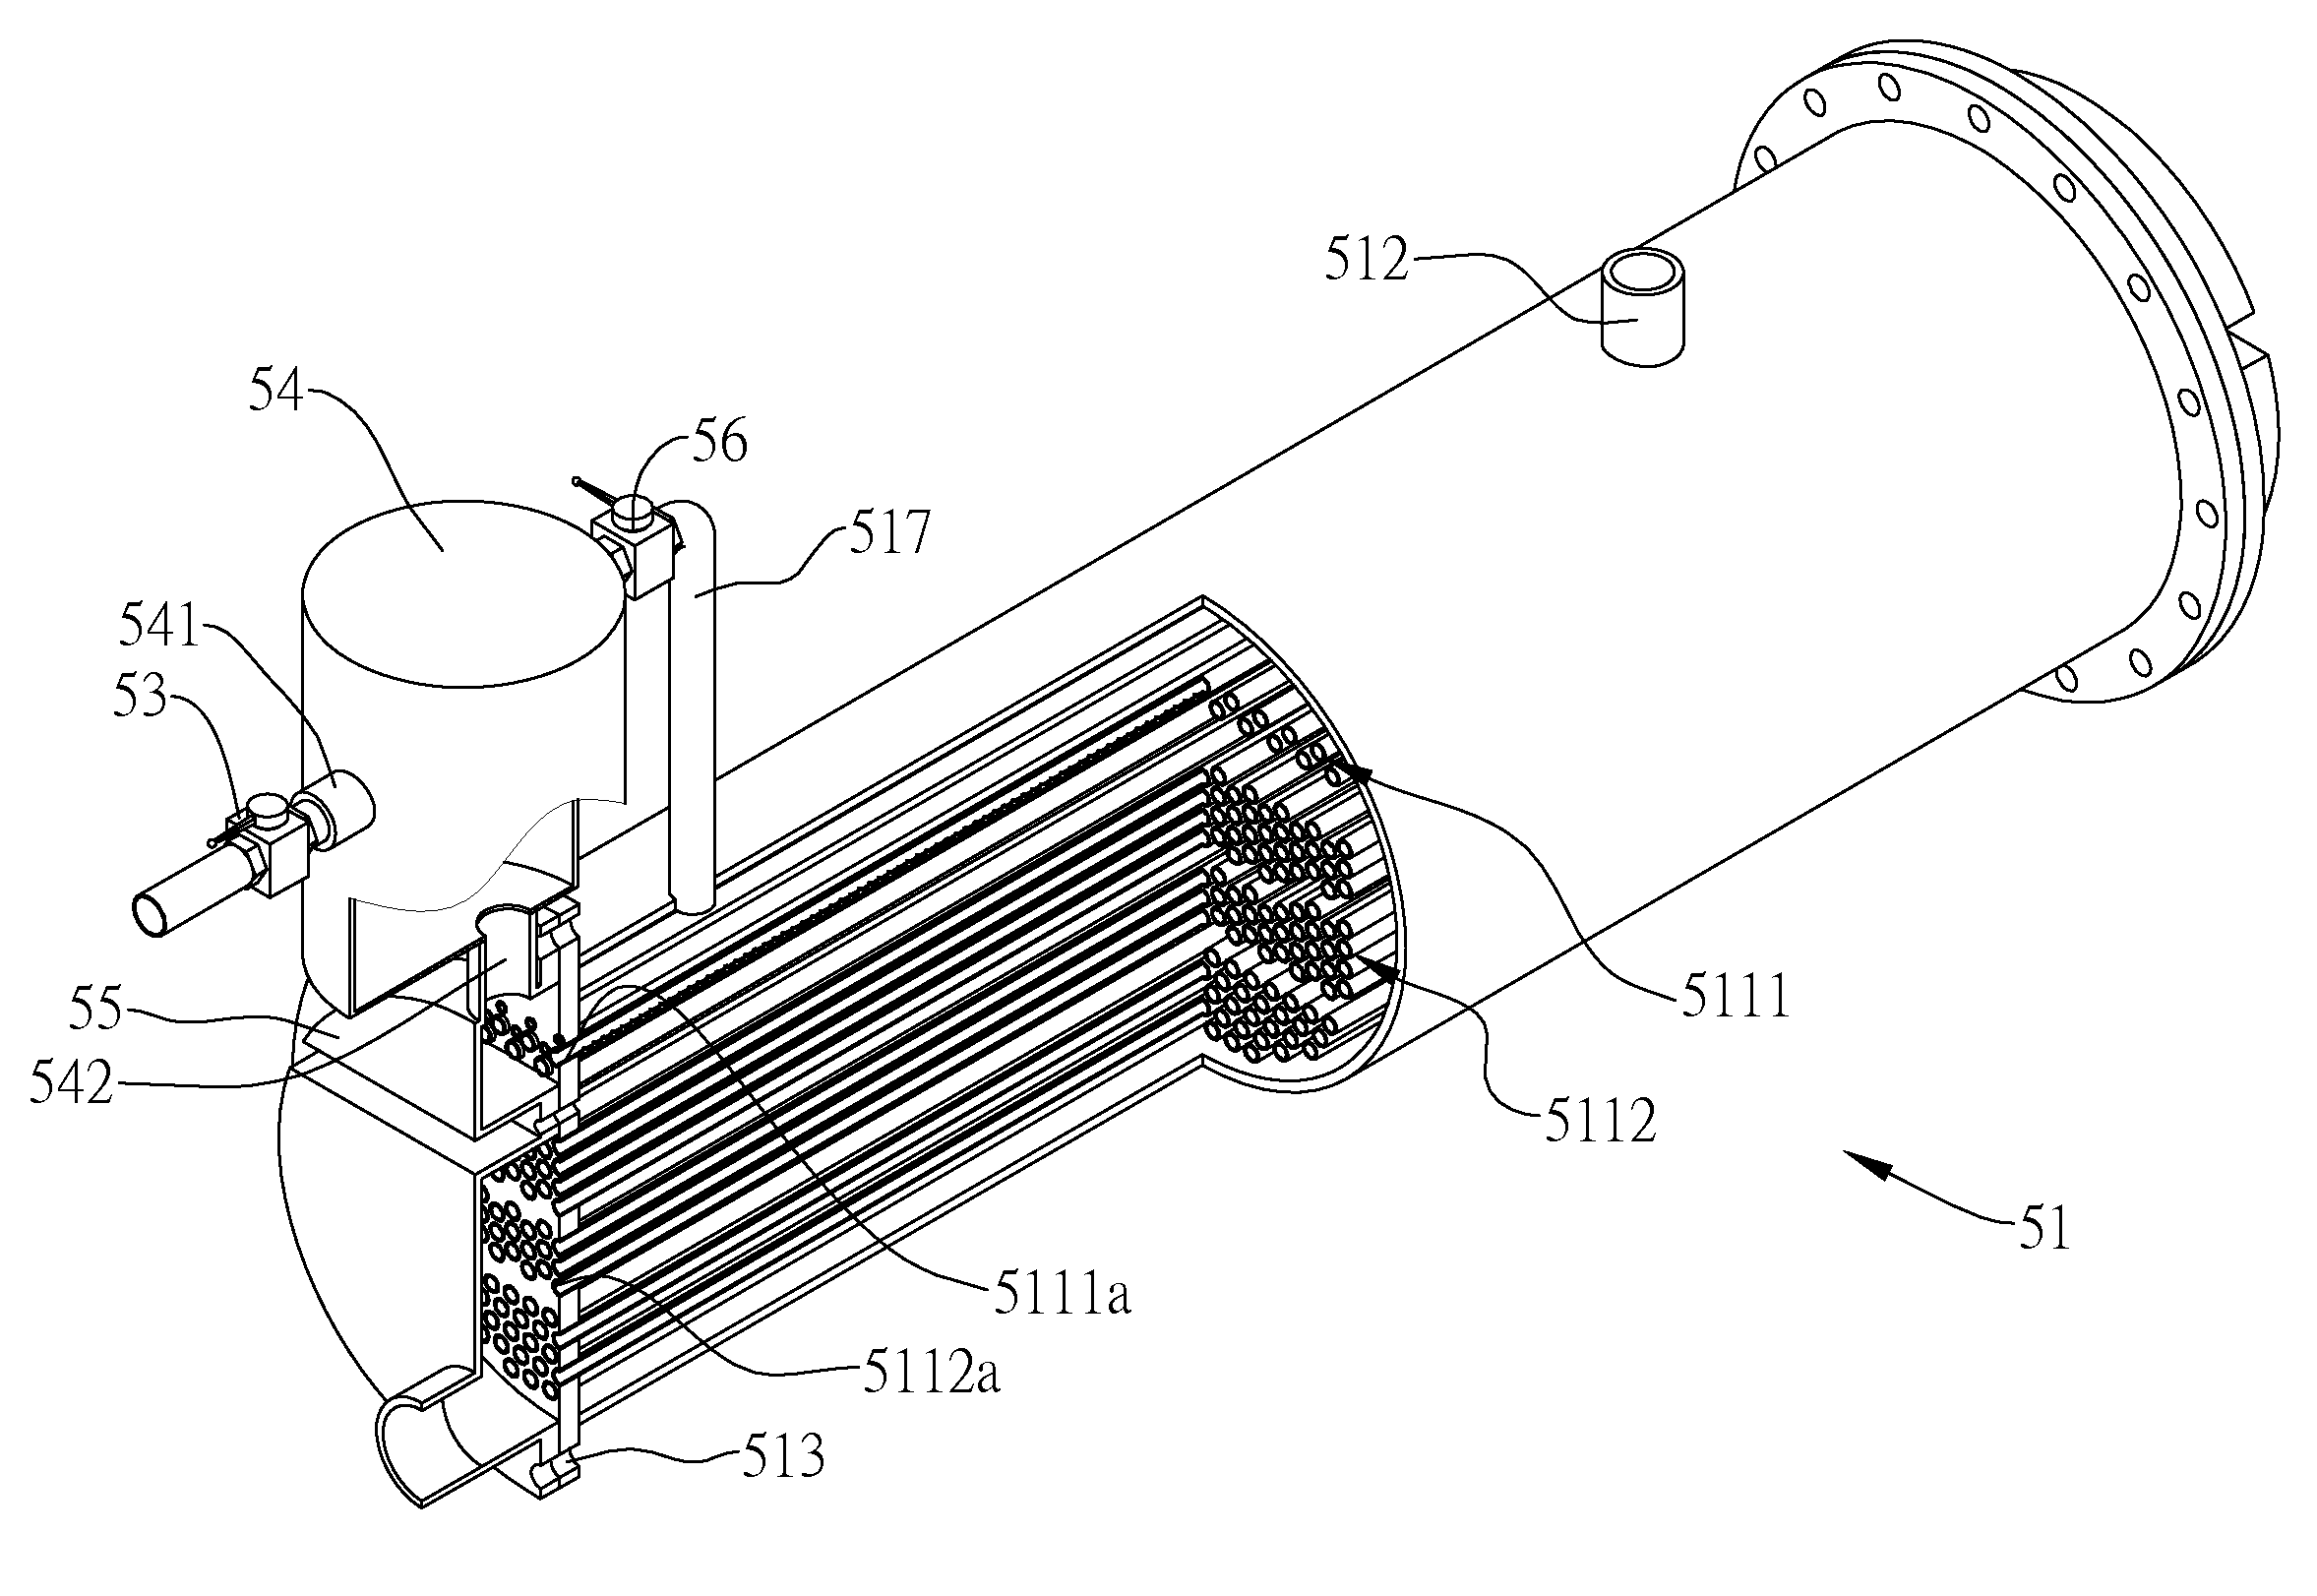 Pressure-adjustable multi-tube spraying device